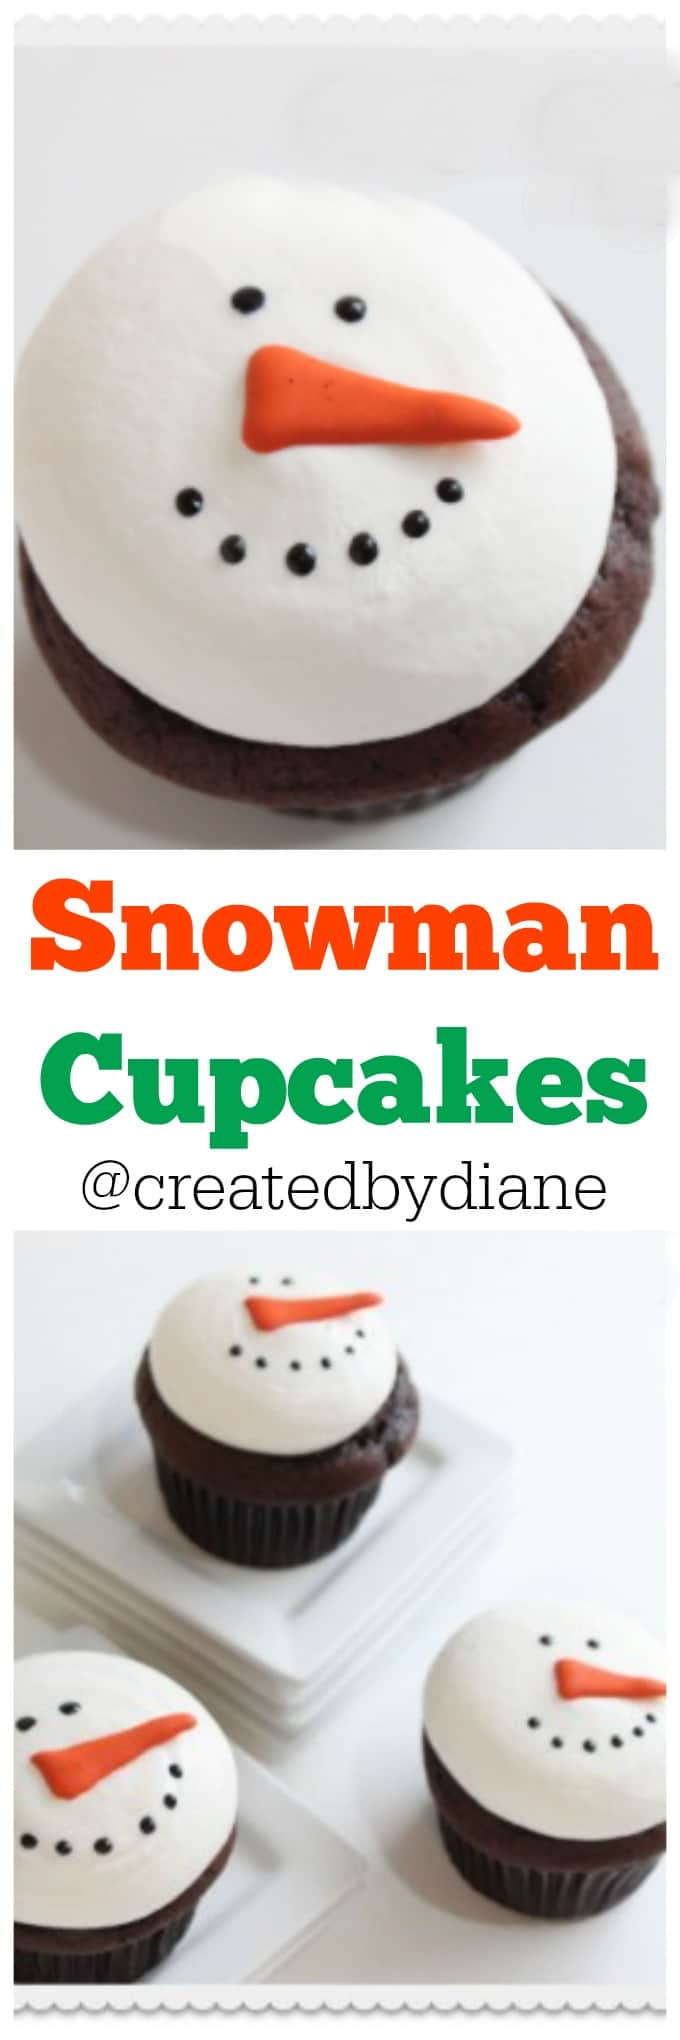 snowman cupcakes @createdbydiane